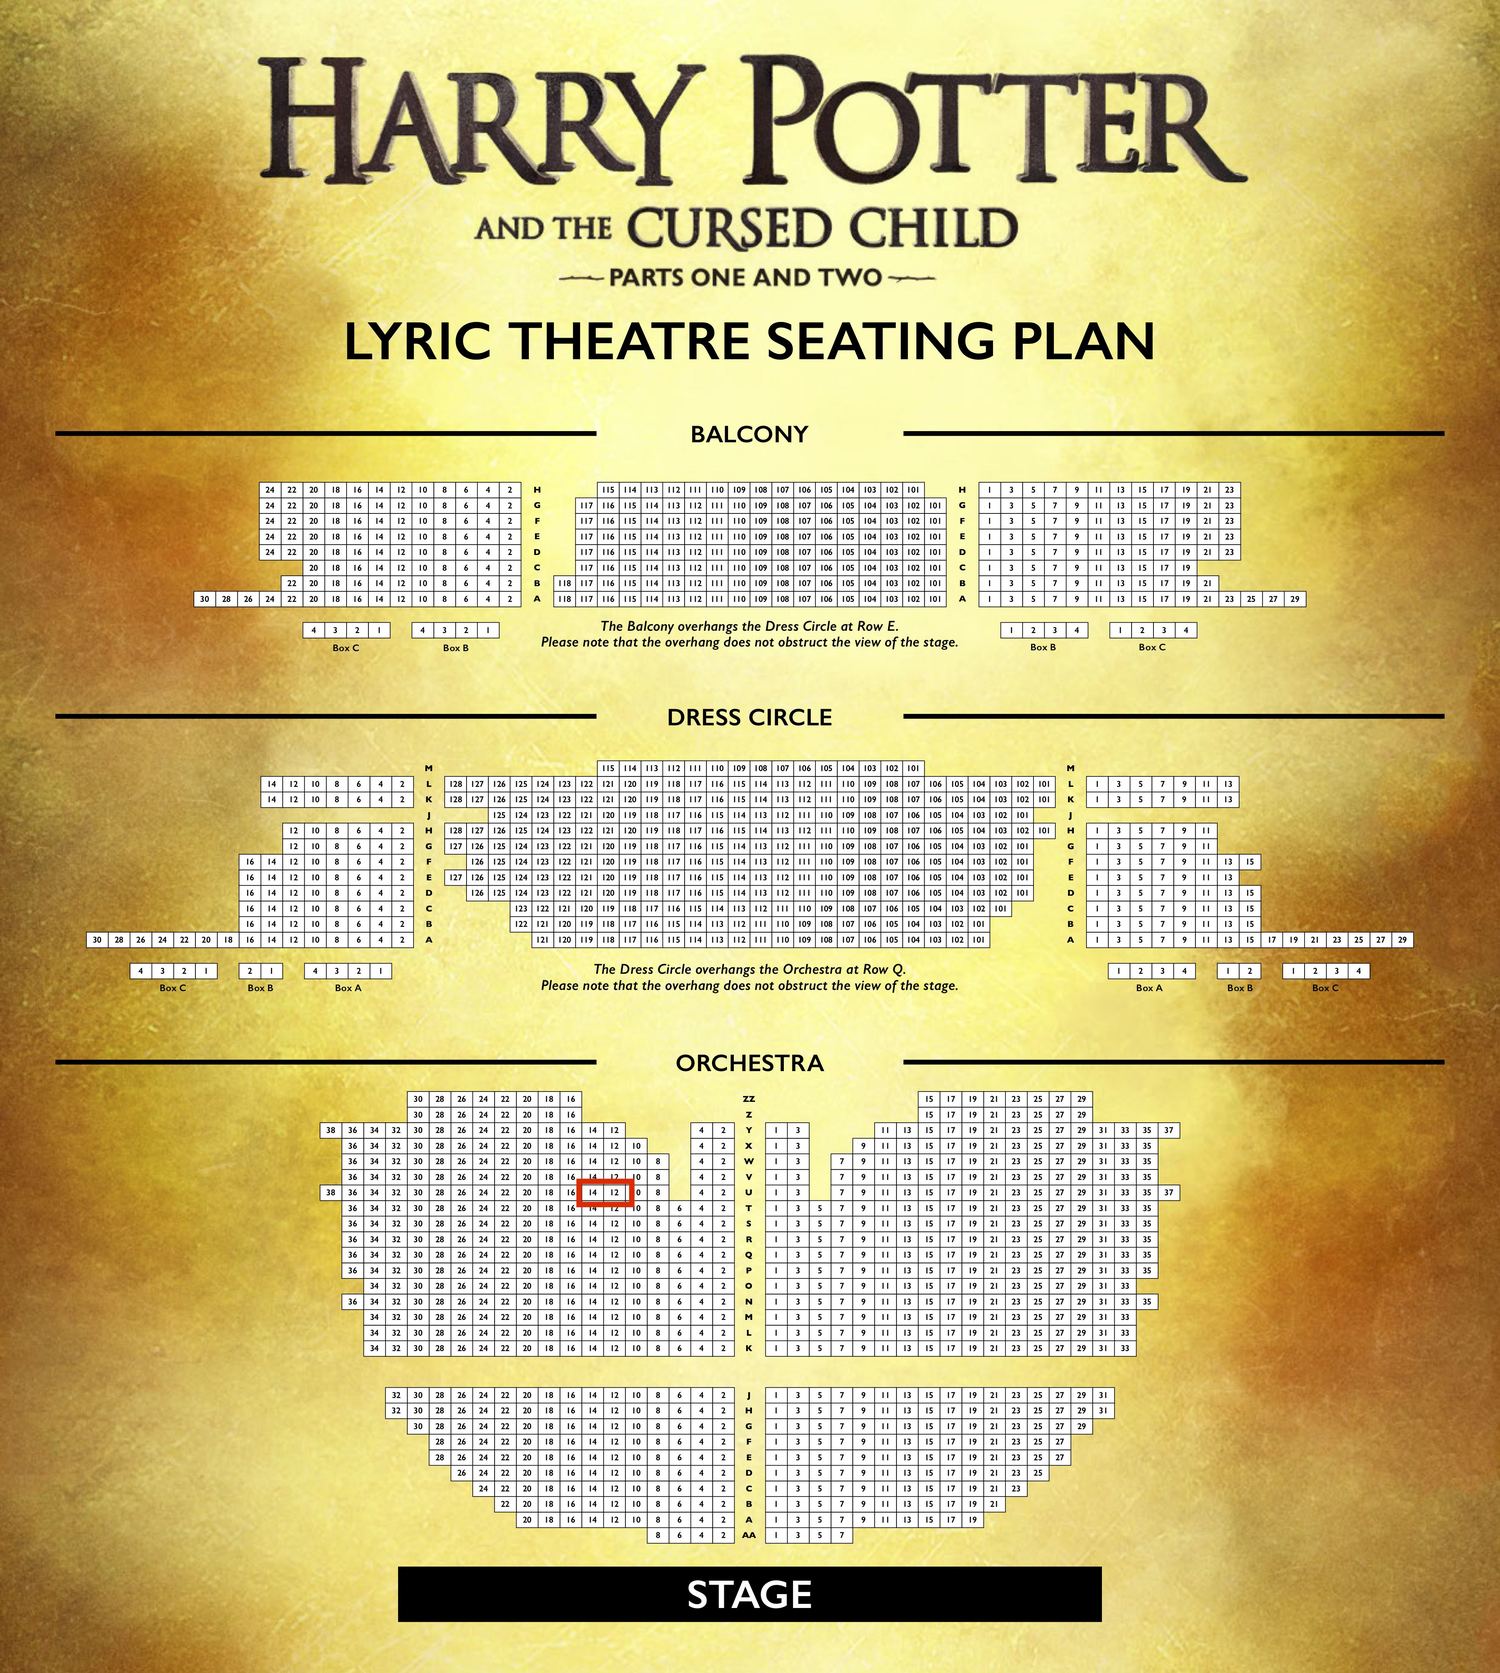 4/14 Harry Potter - 1 Orch ticket- $125 per part!